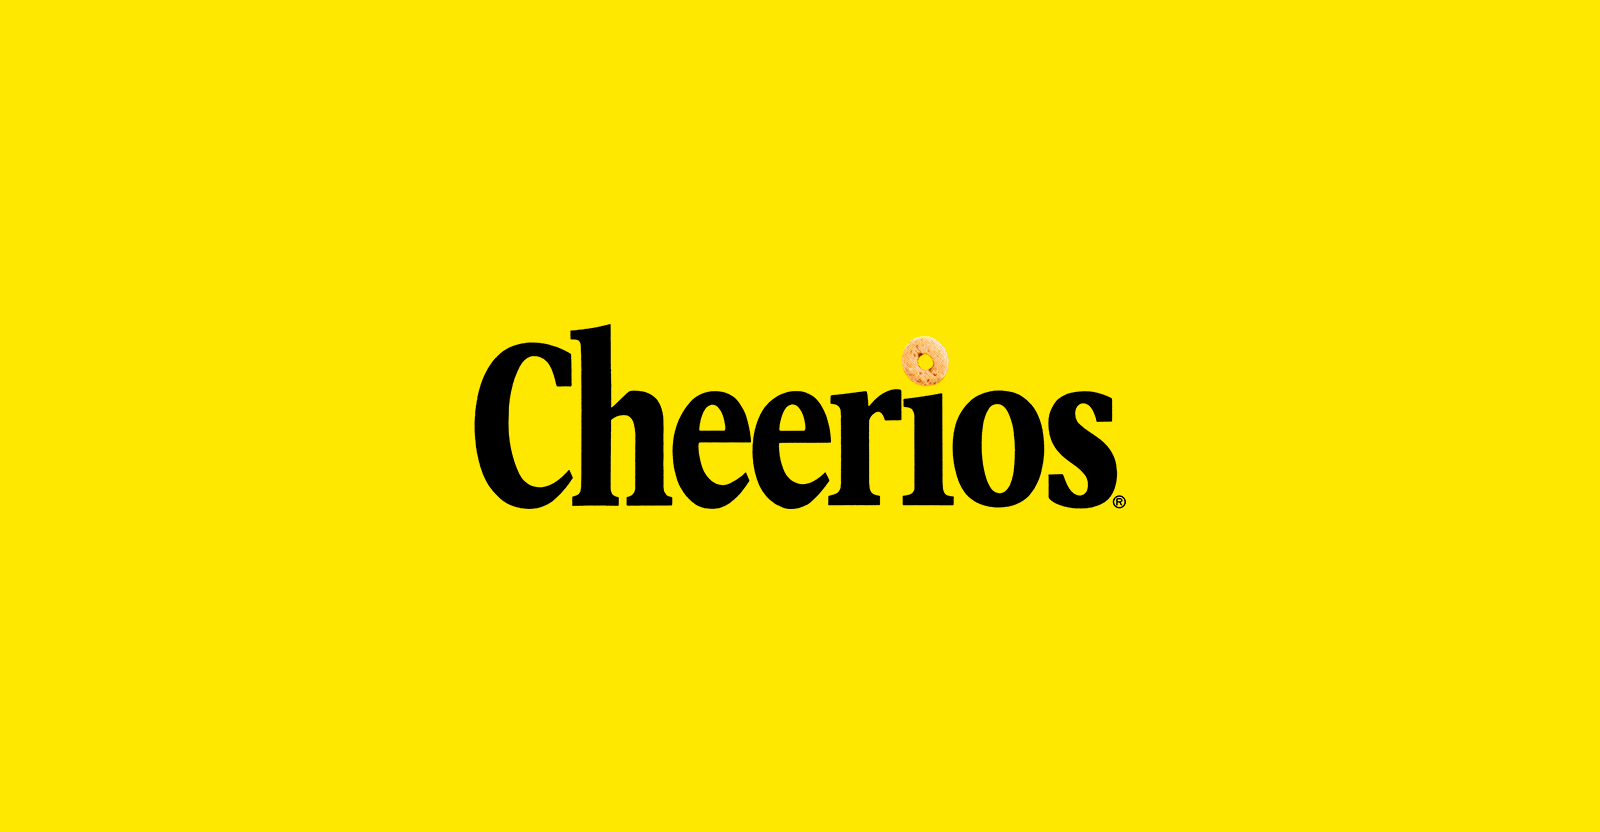 are cheerios gluten-free